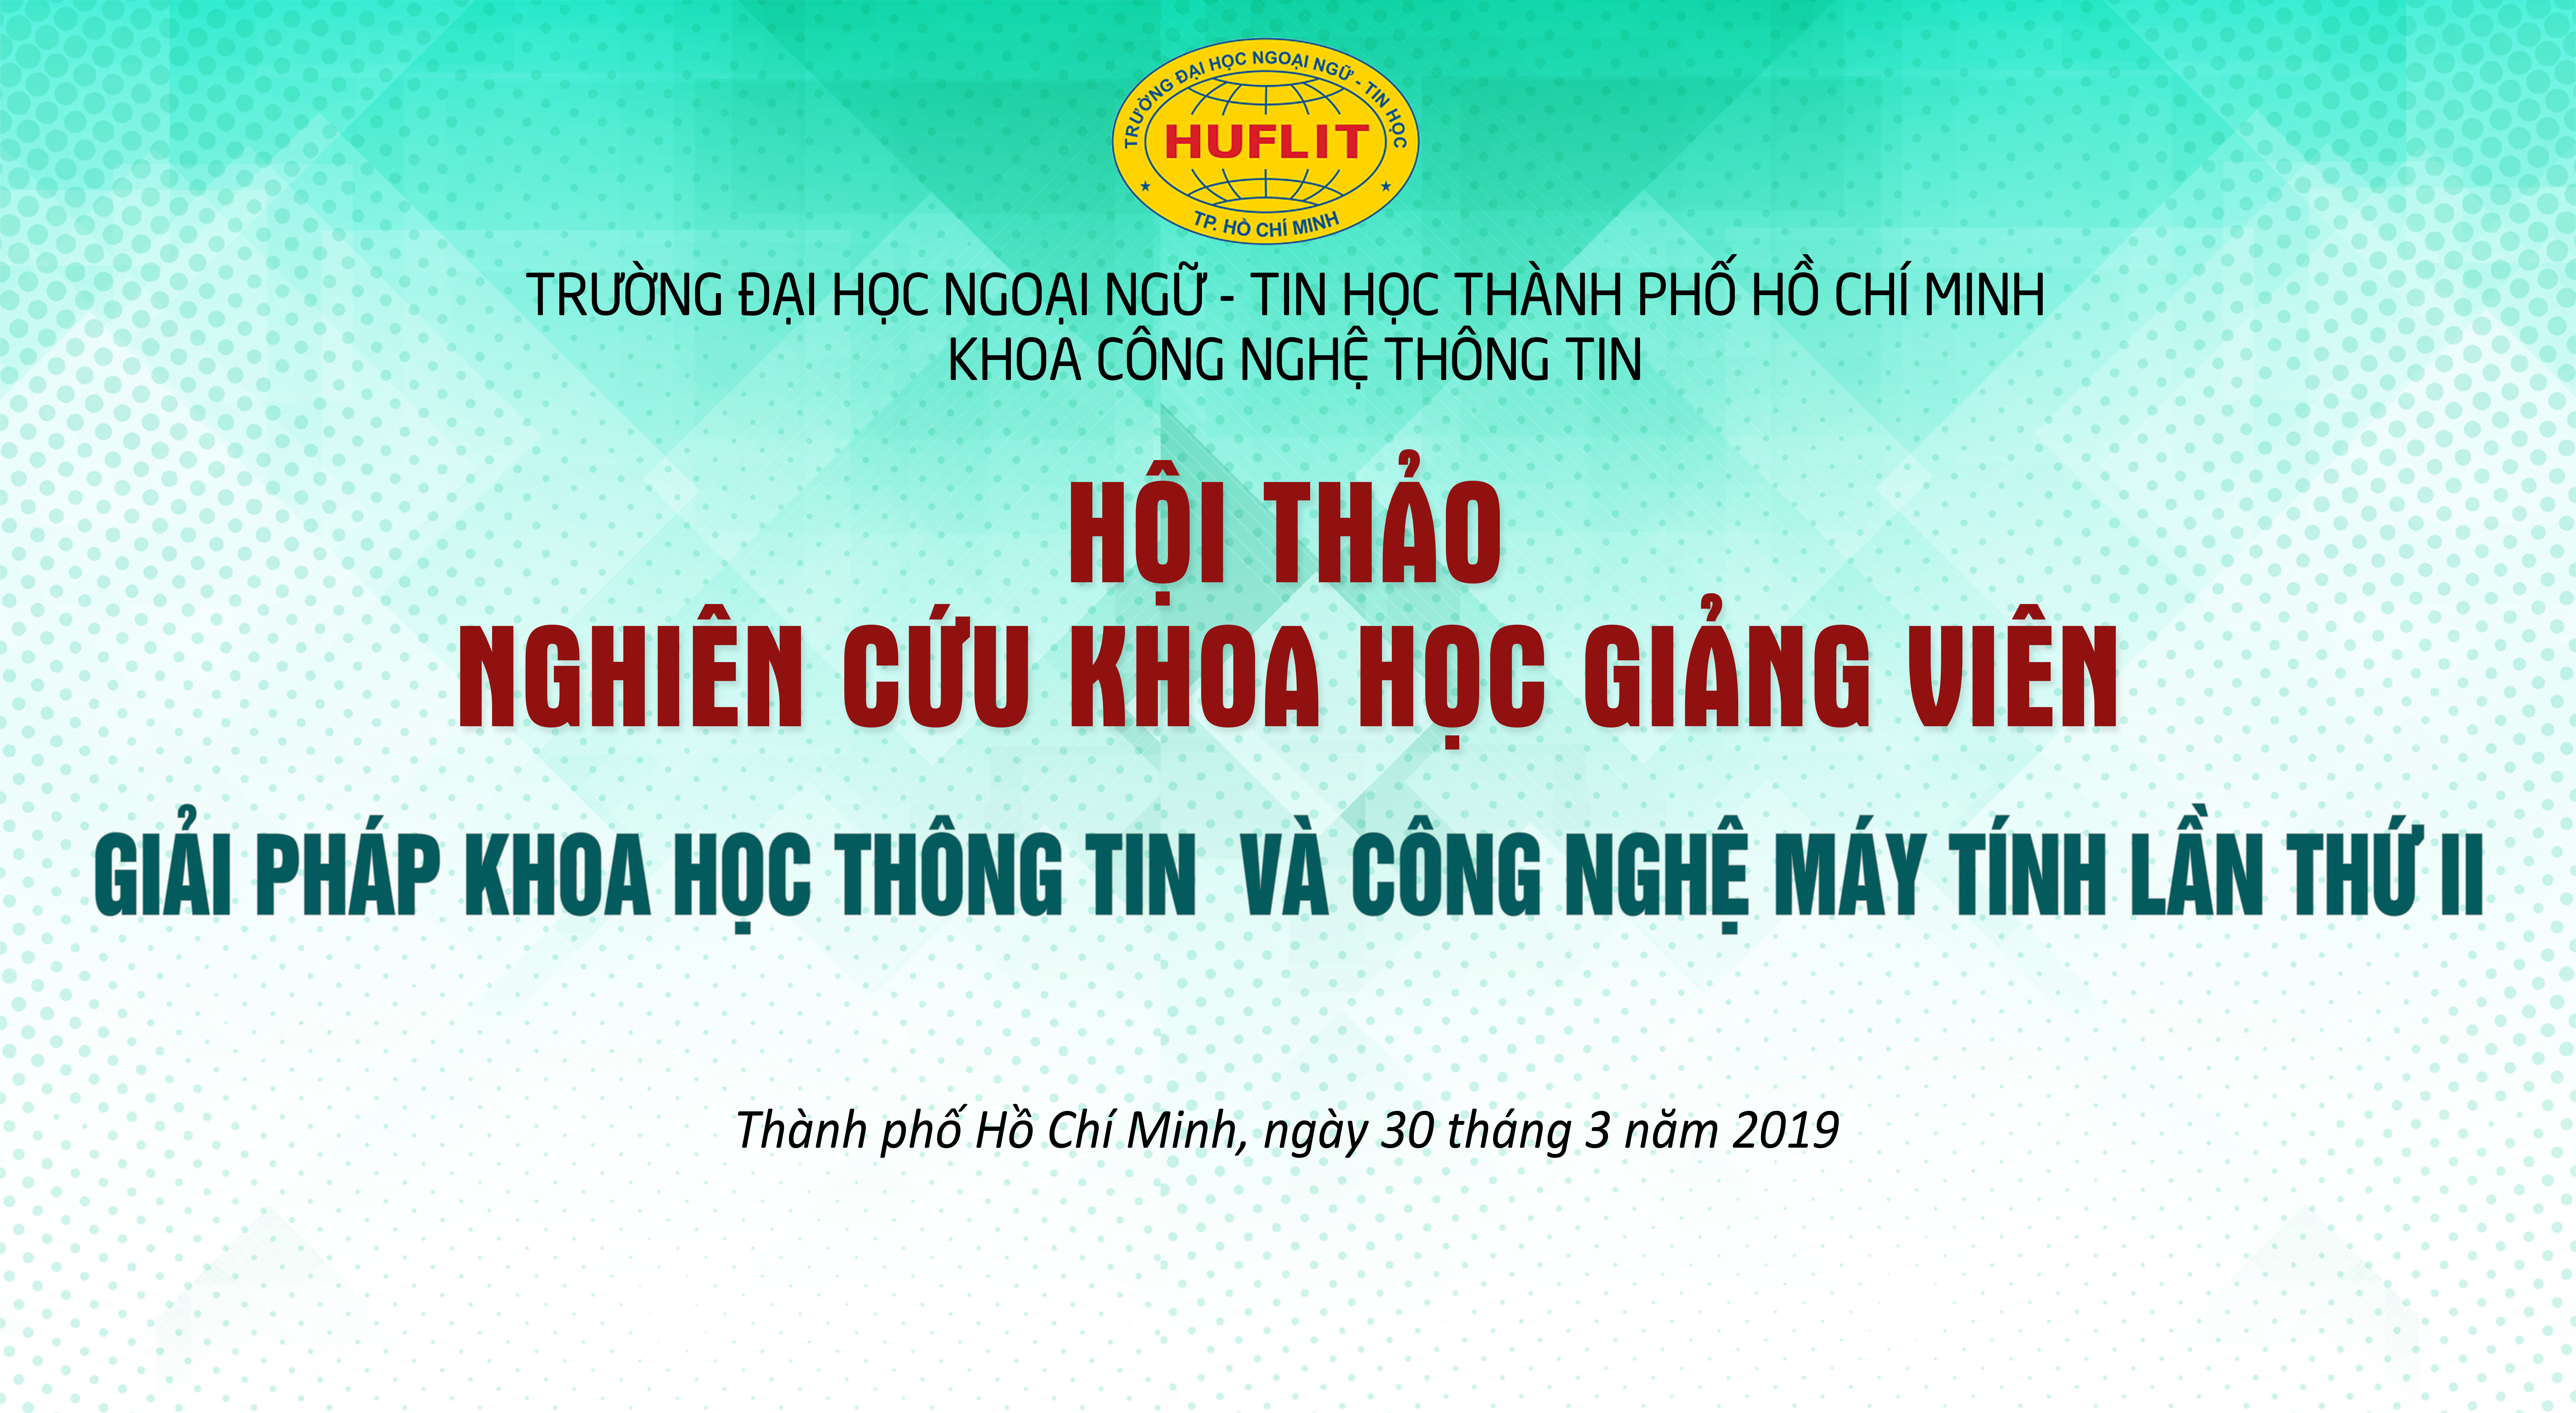 Background Hoi thao NCKH GV lan I (2017-2018)